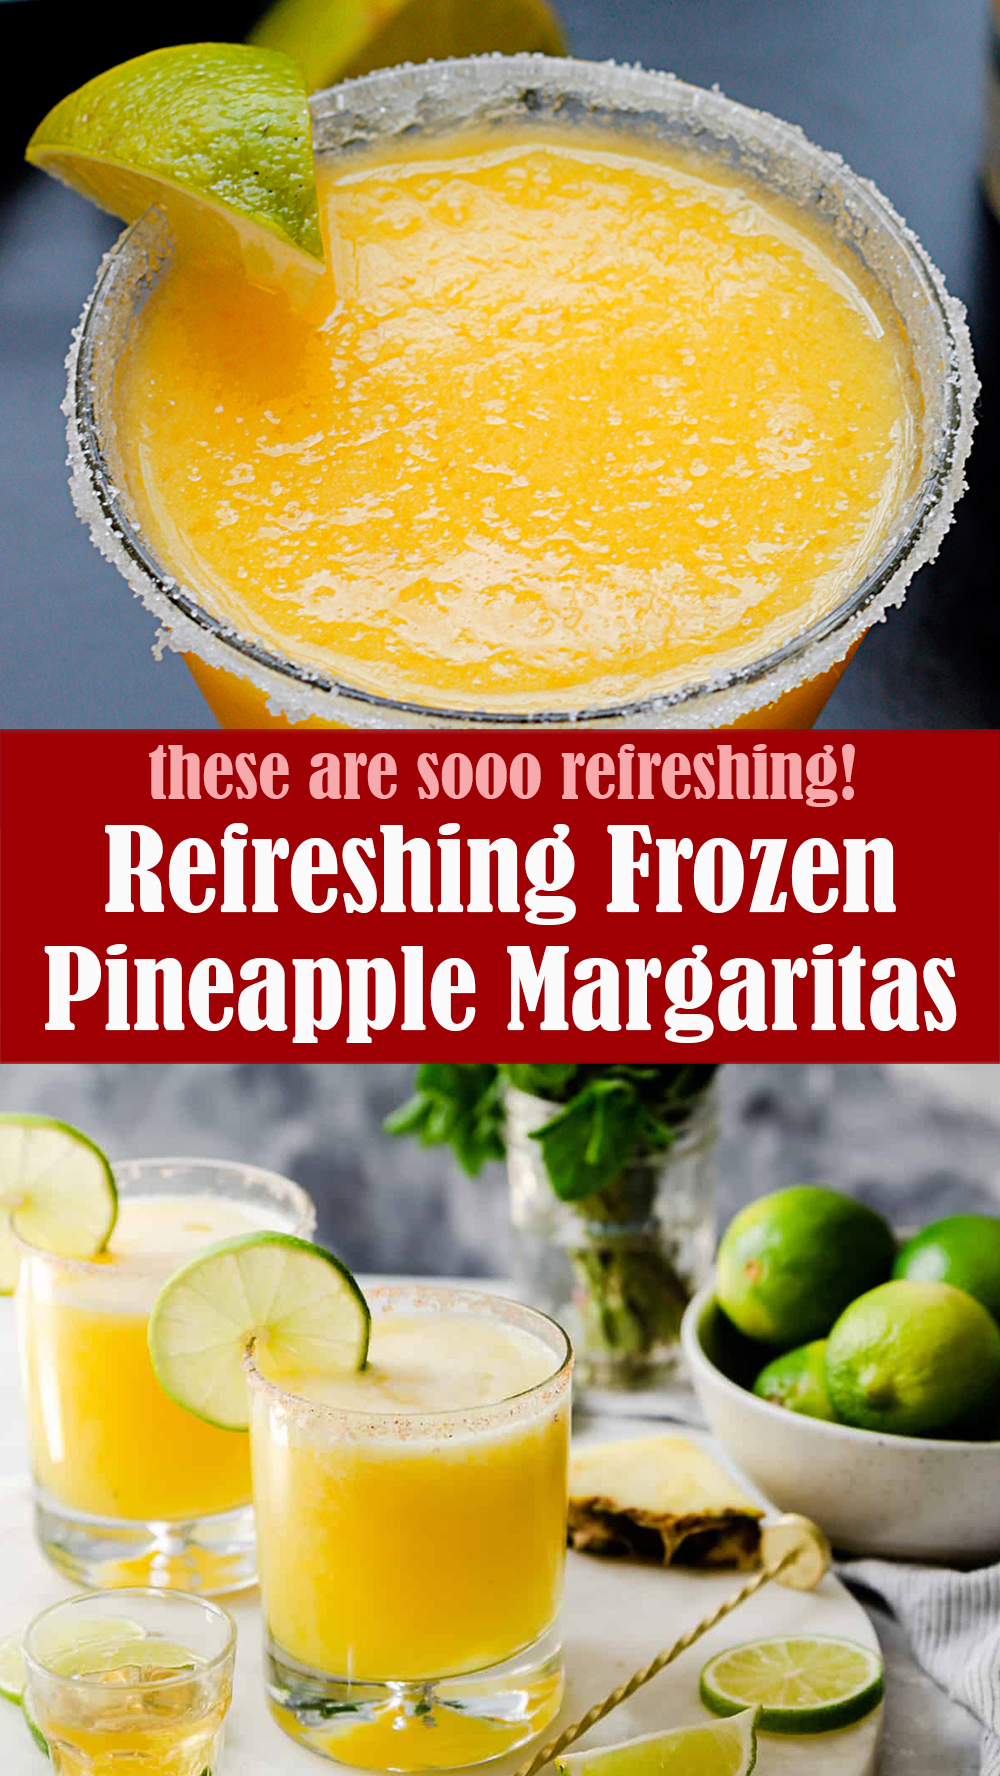 Refreshing Frozen Pineapple Margaritas